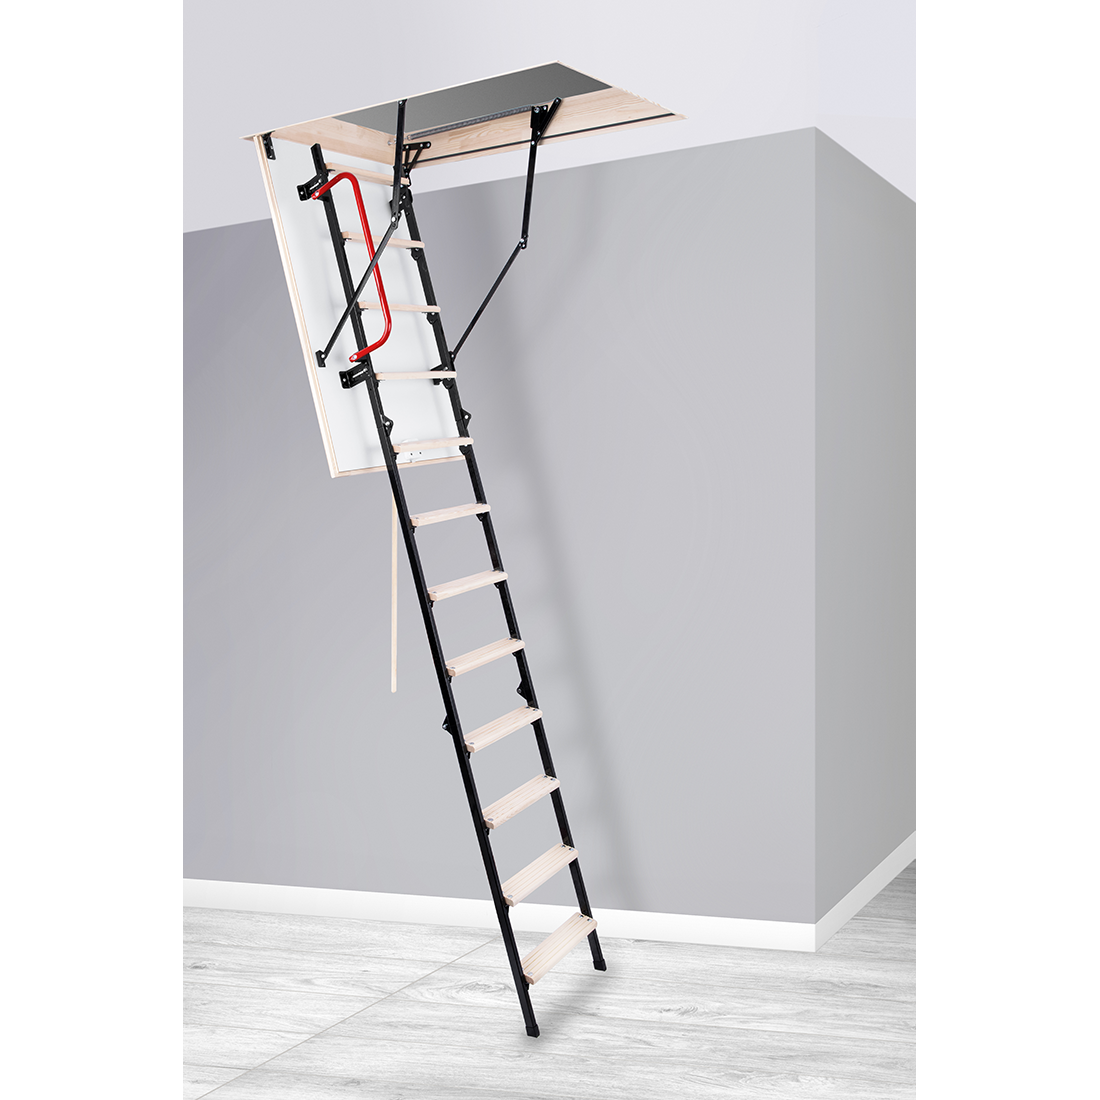 ADDE Metal-Wooden Attic Ladder 51" x 21.5"  Up to 9.18 feet